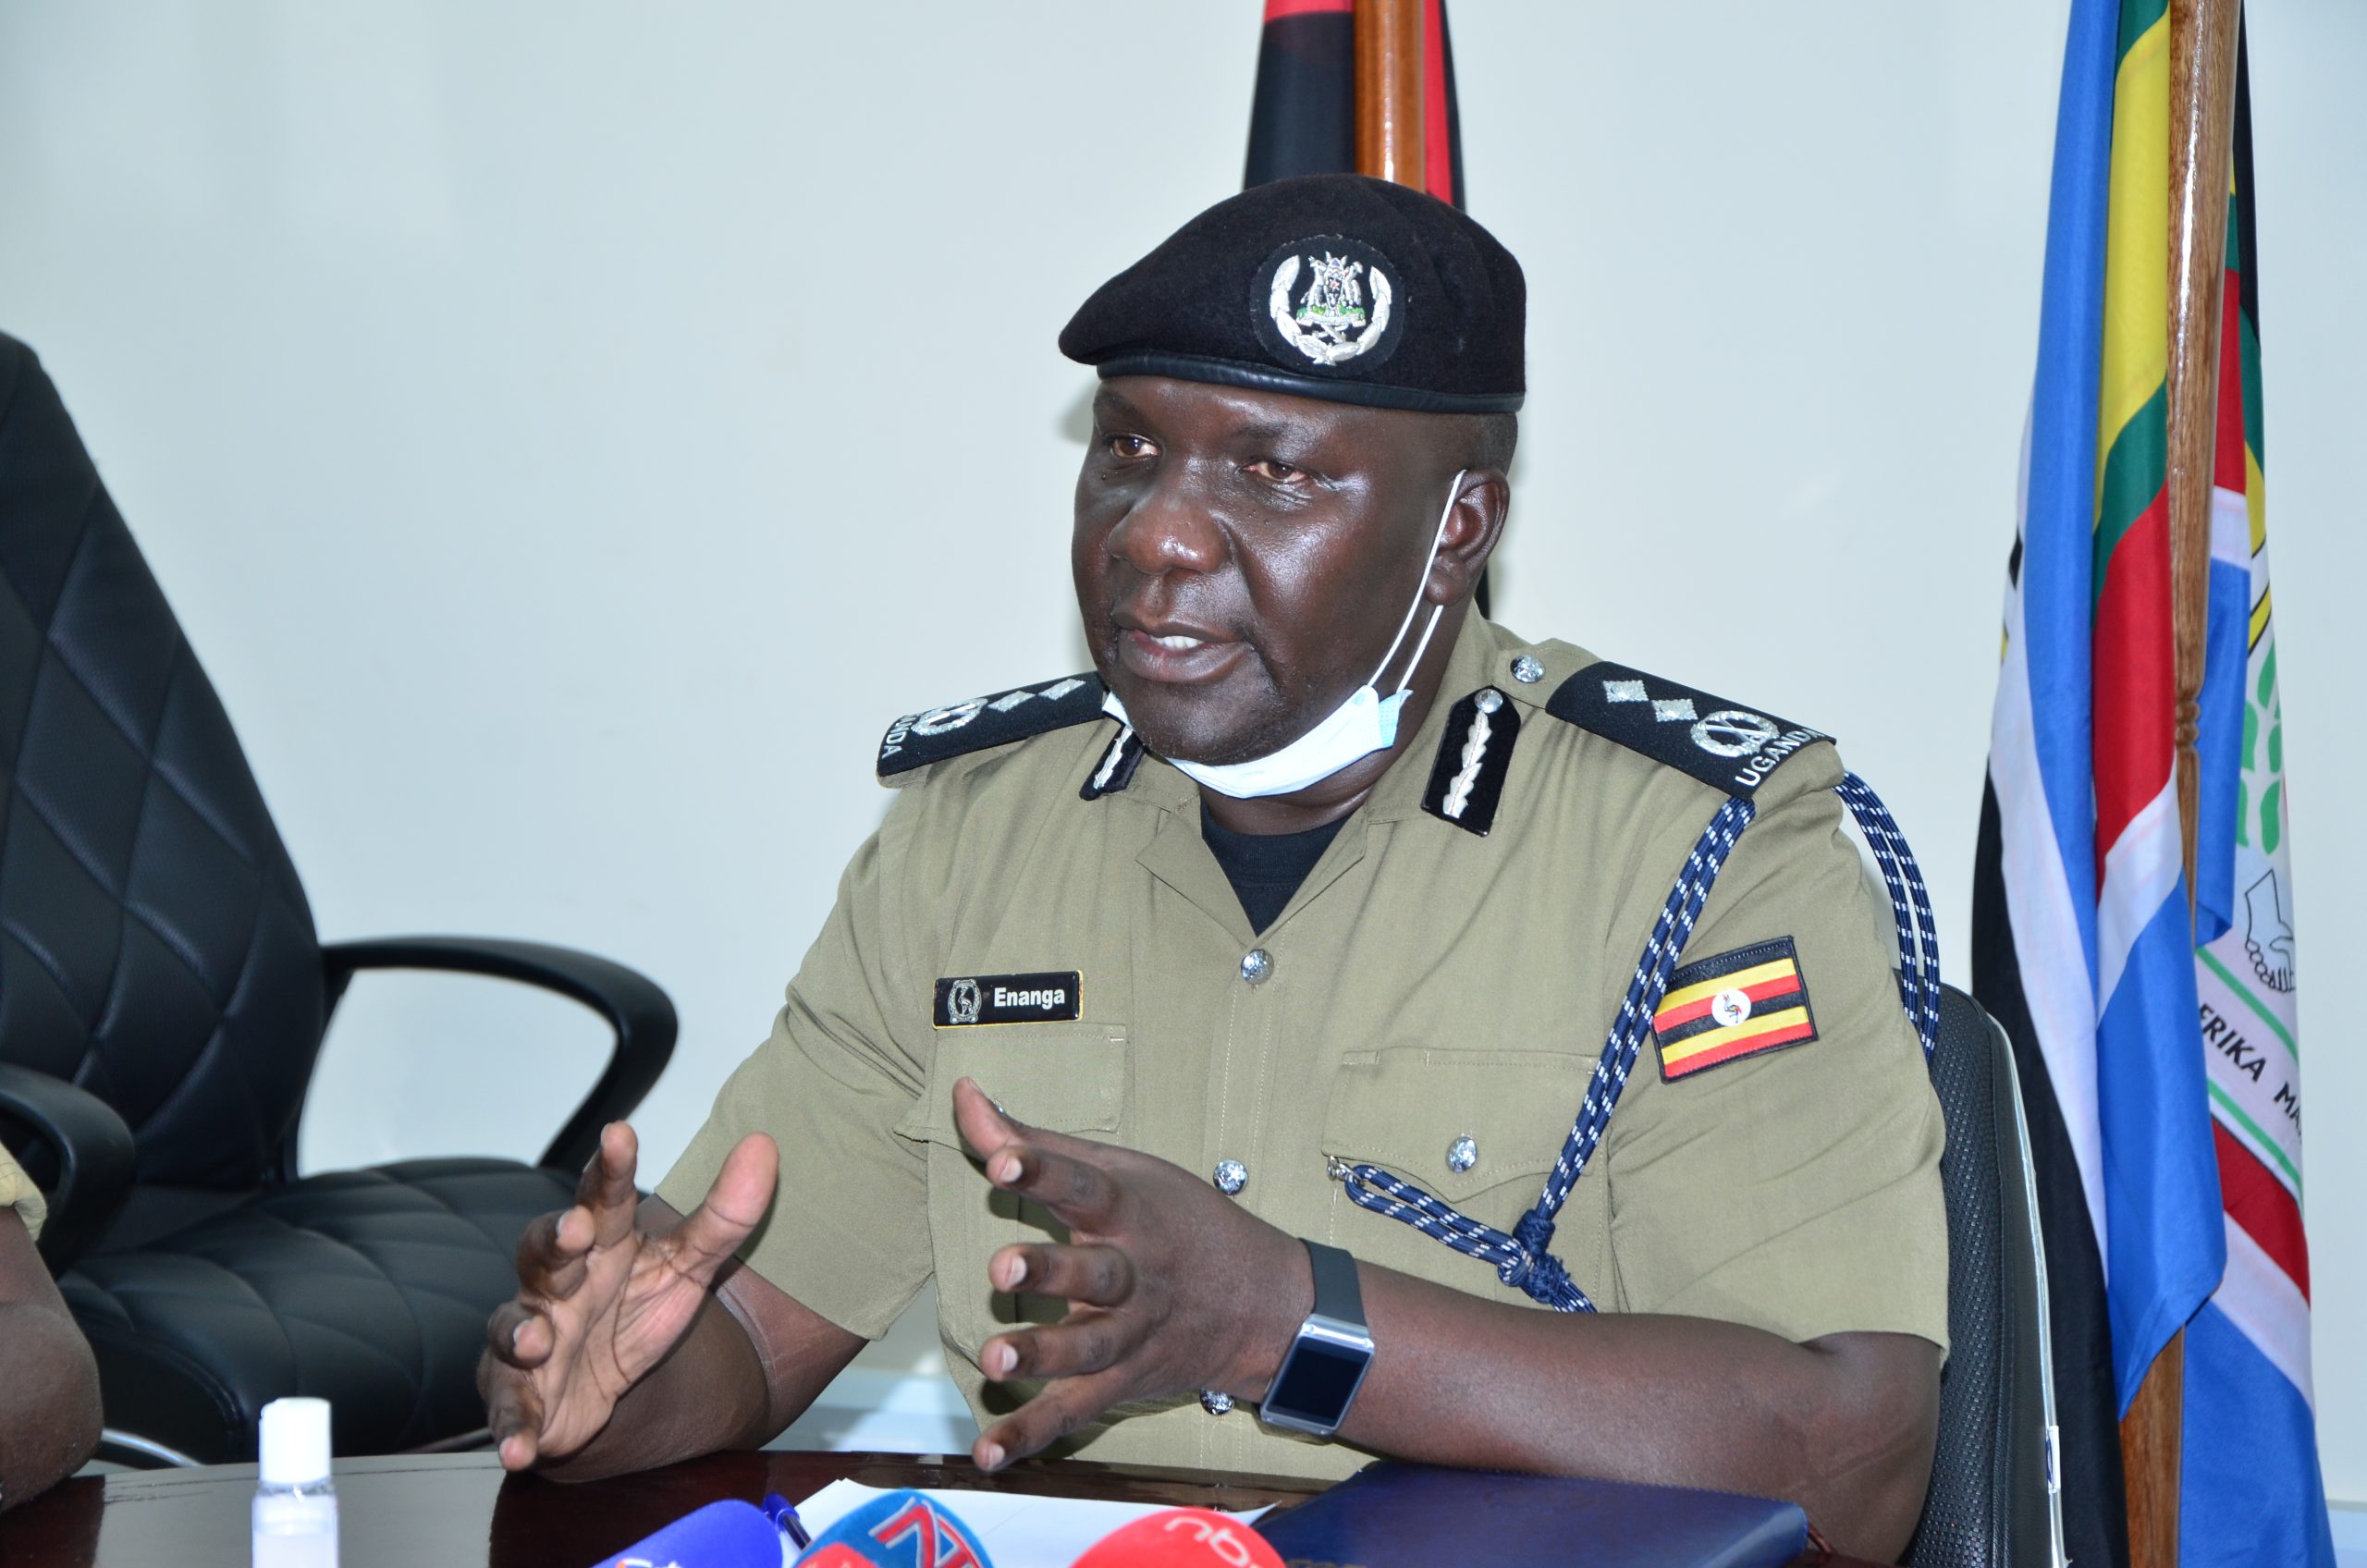 Uganda Police’s bribery accusations